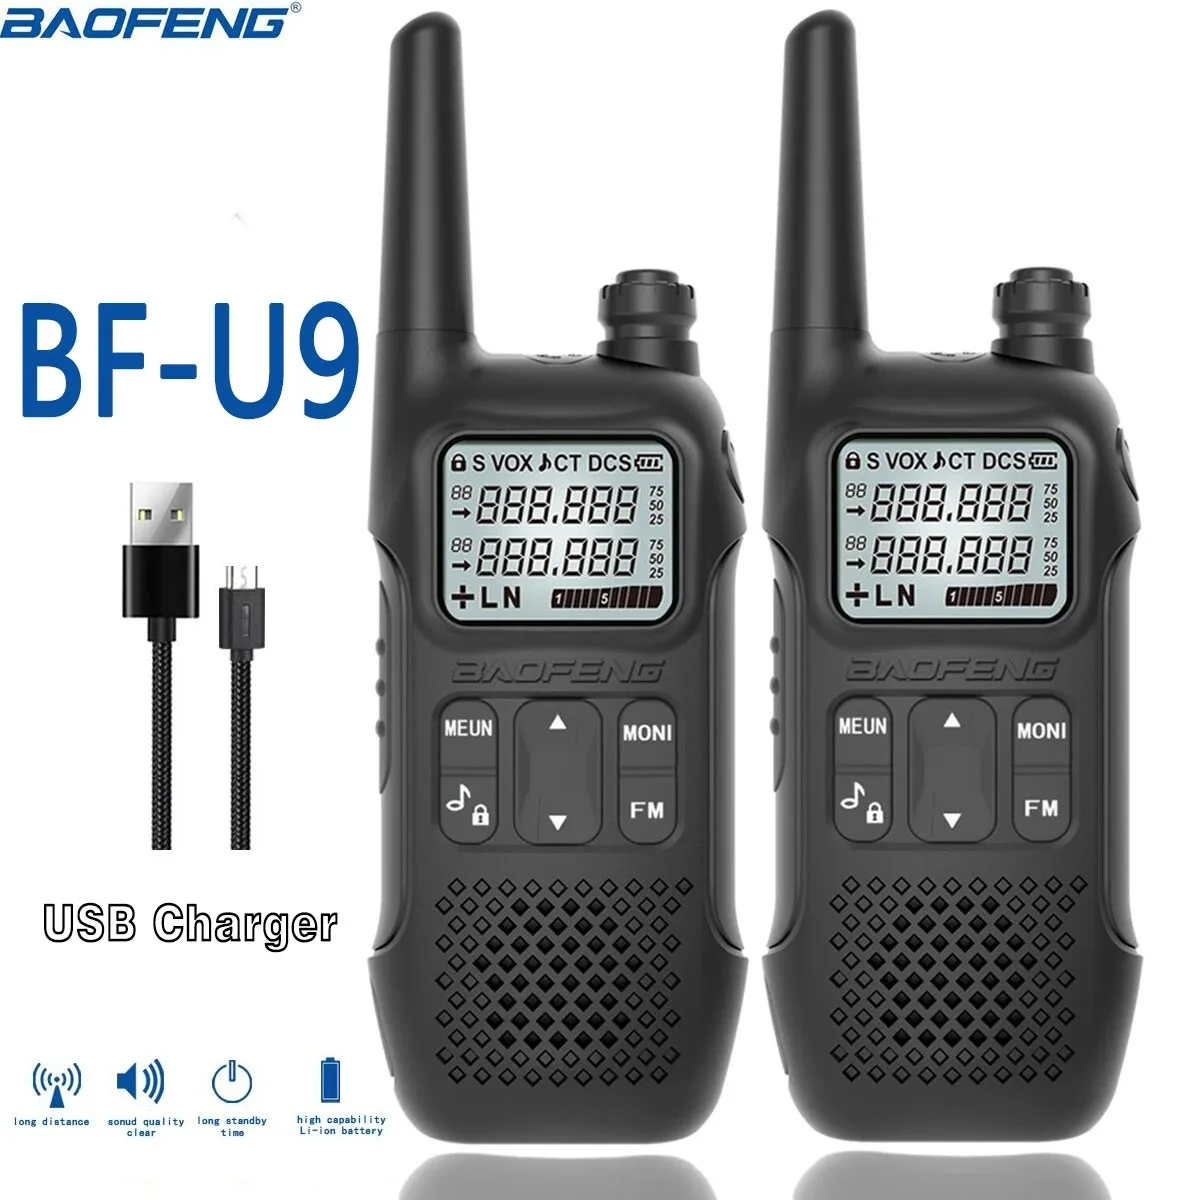 BAOFENG BF-U9 walkie talkie